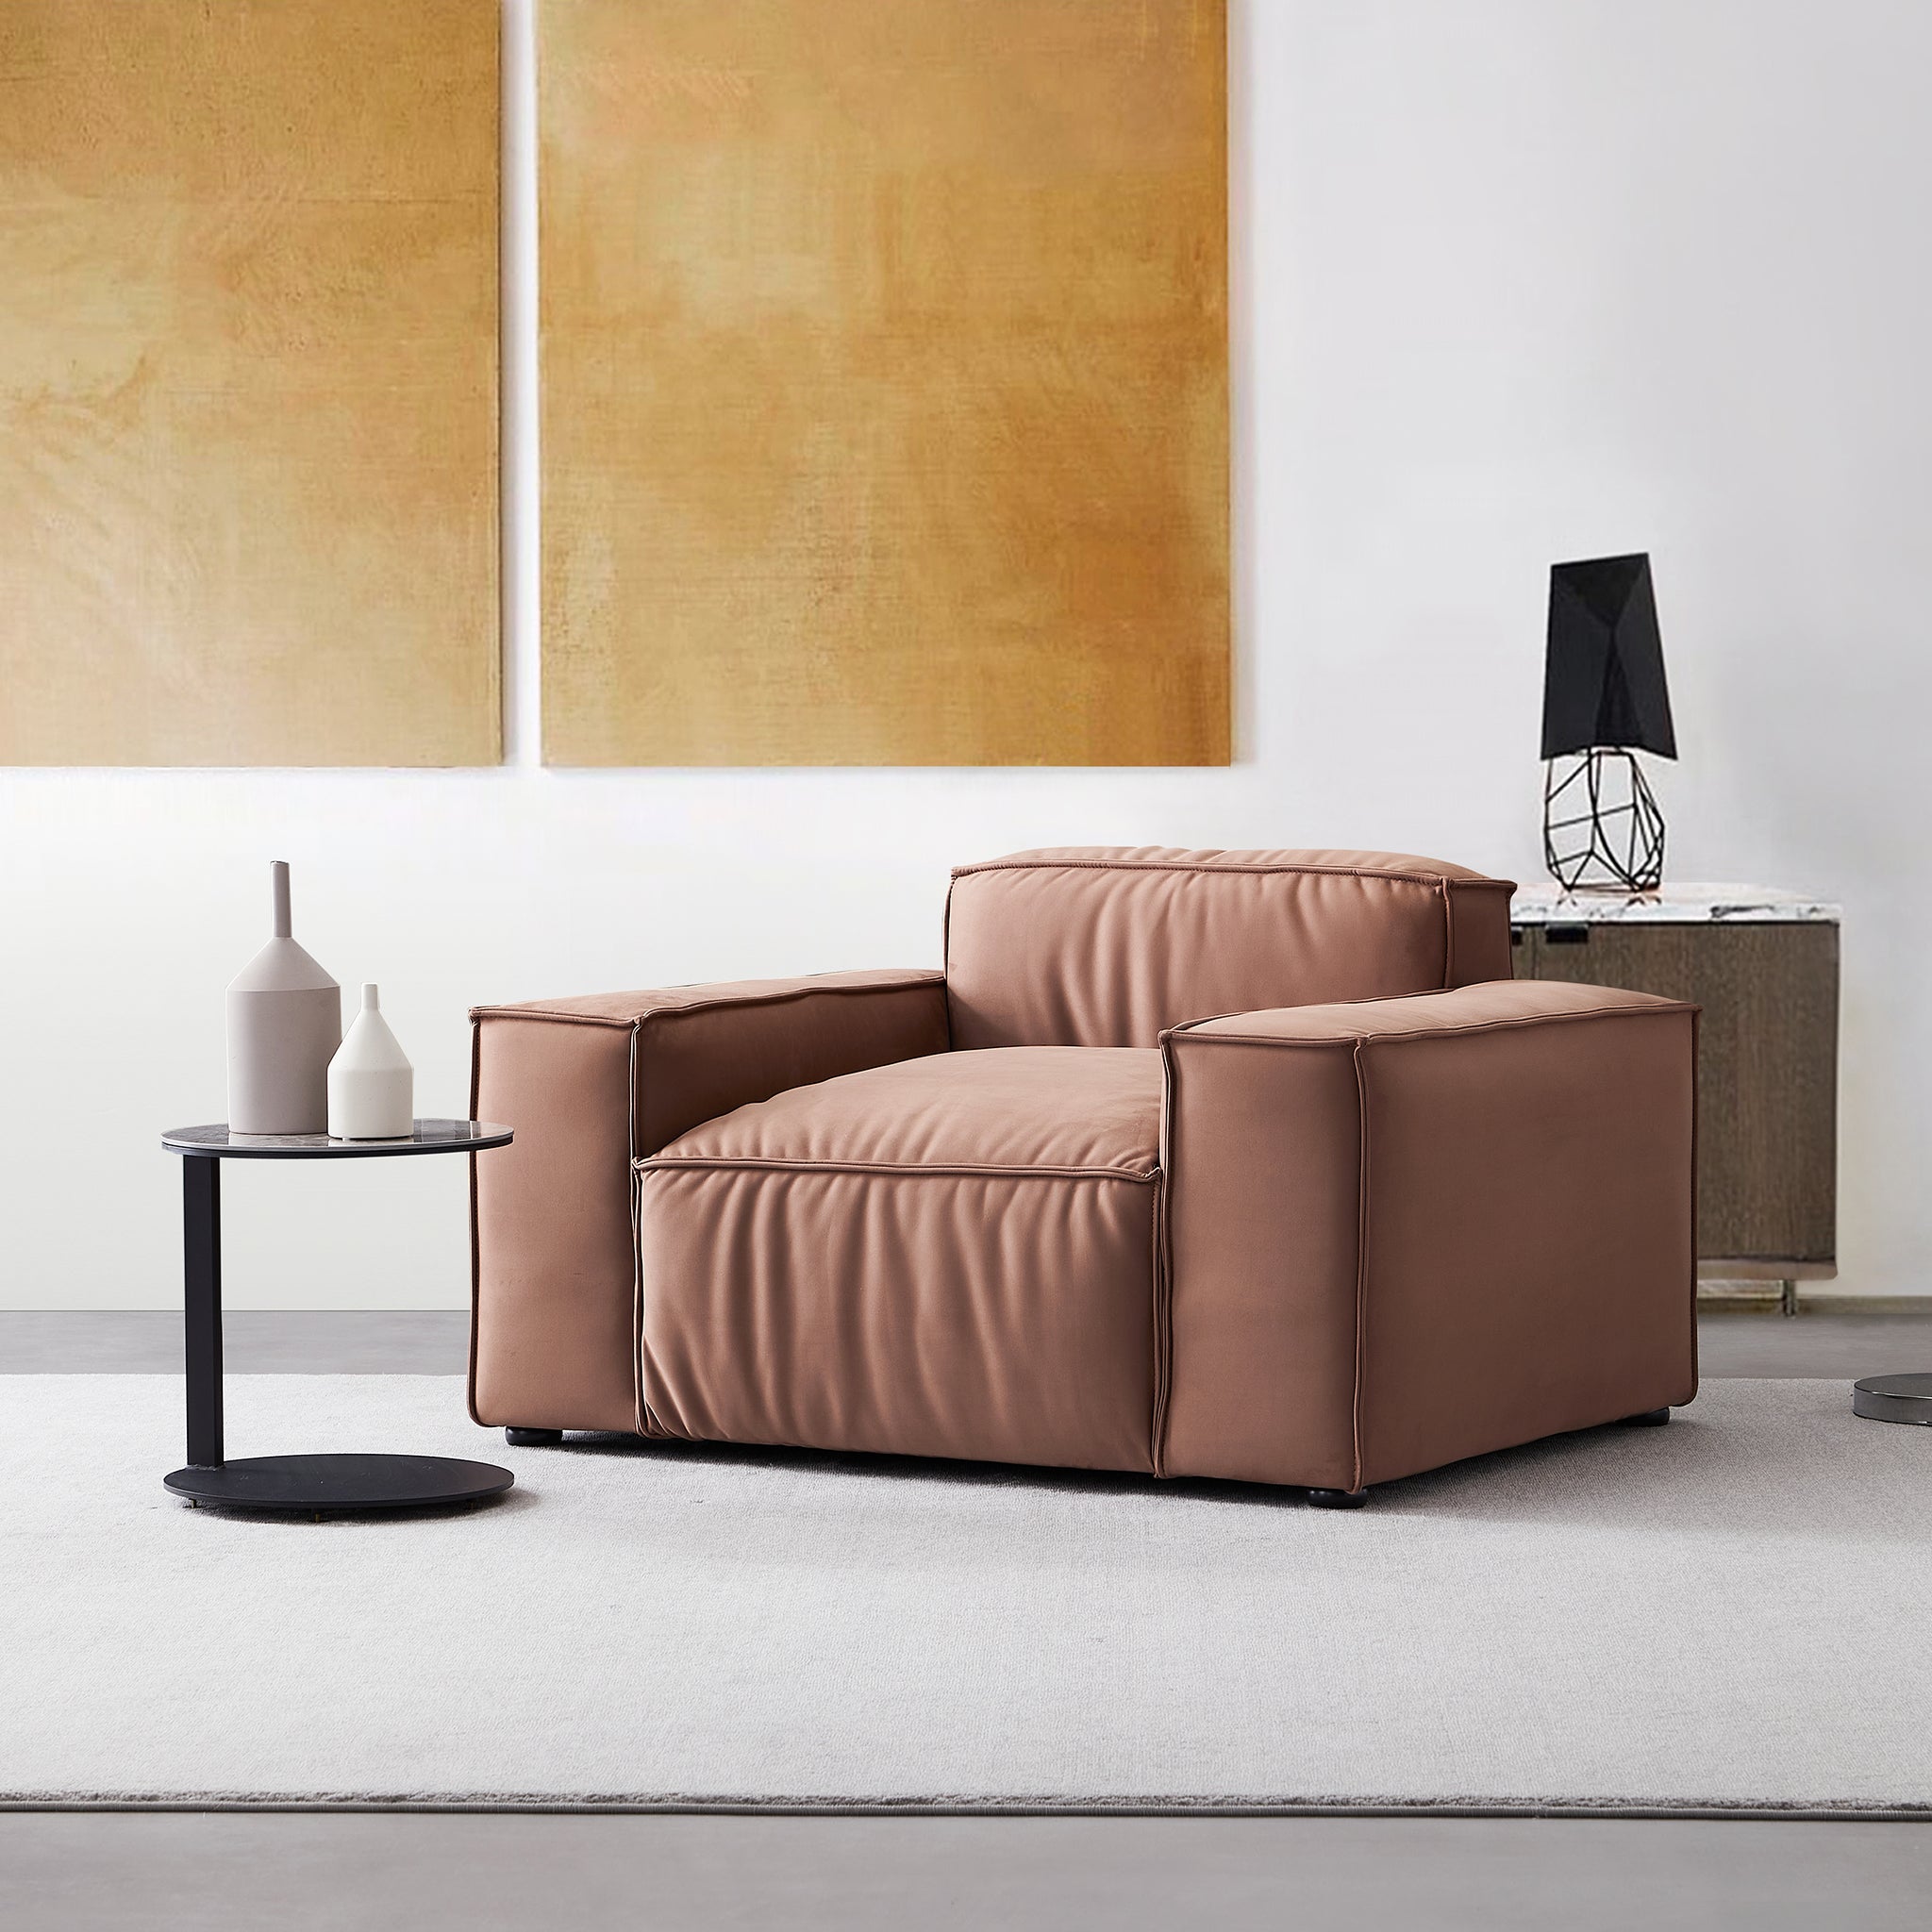 Luxury Minimalist Brown Leather Armchair